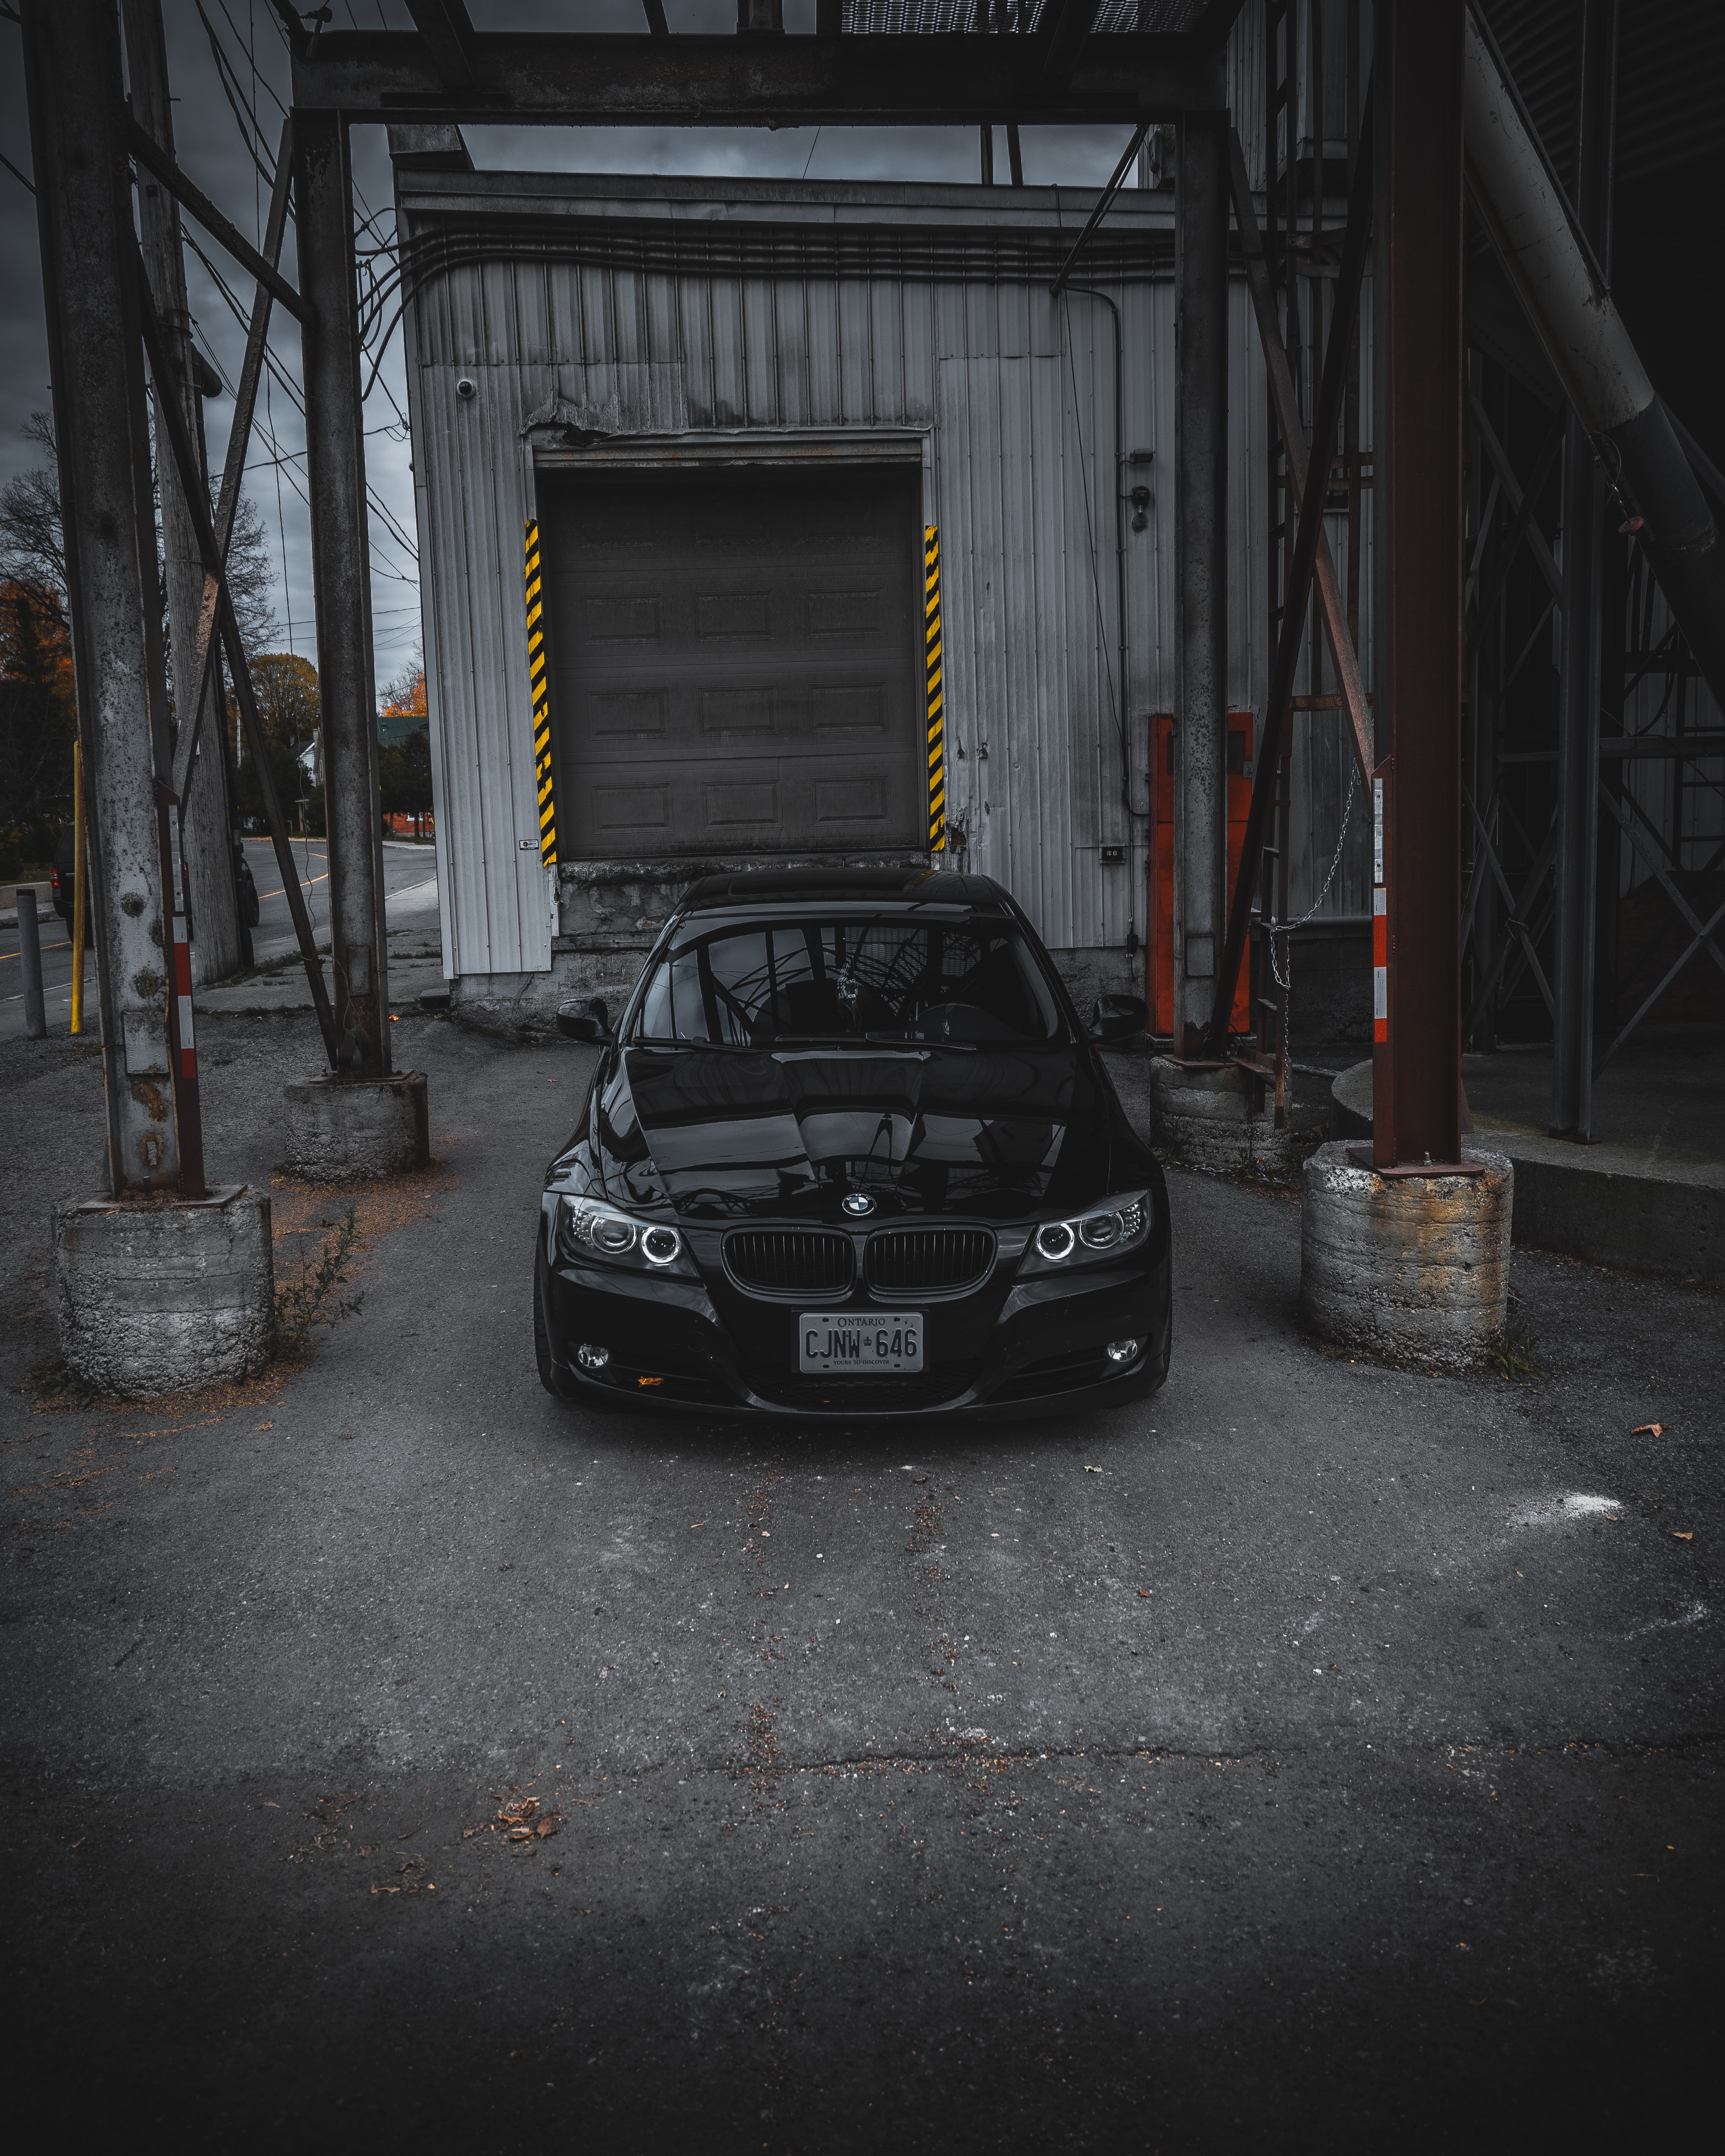 bmw, car, cars, black, front view, garage iphone wallpaper